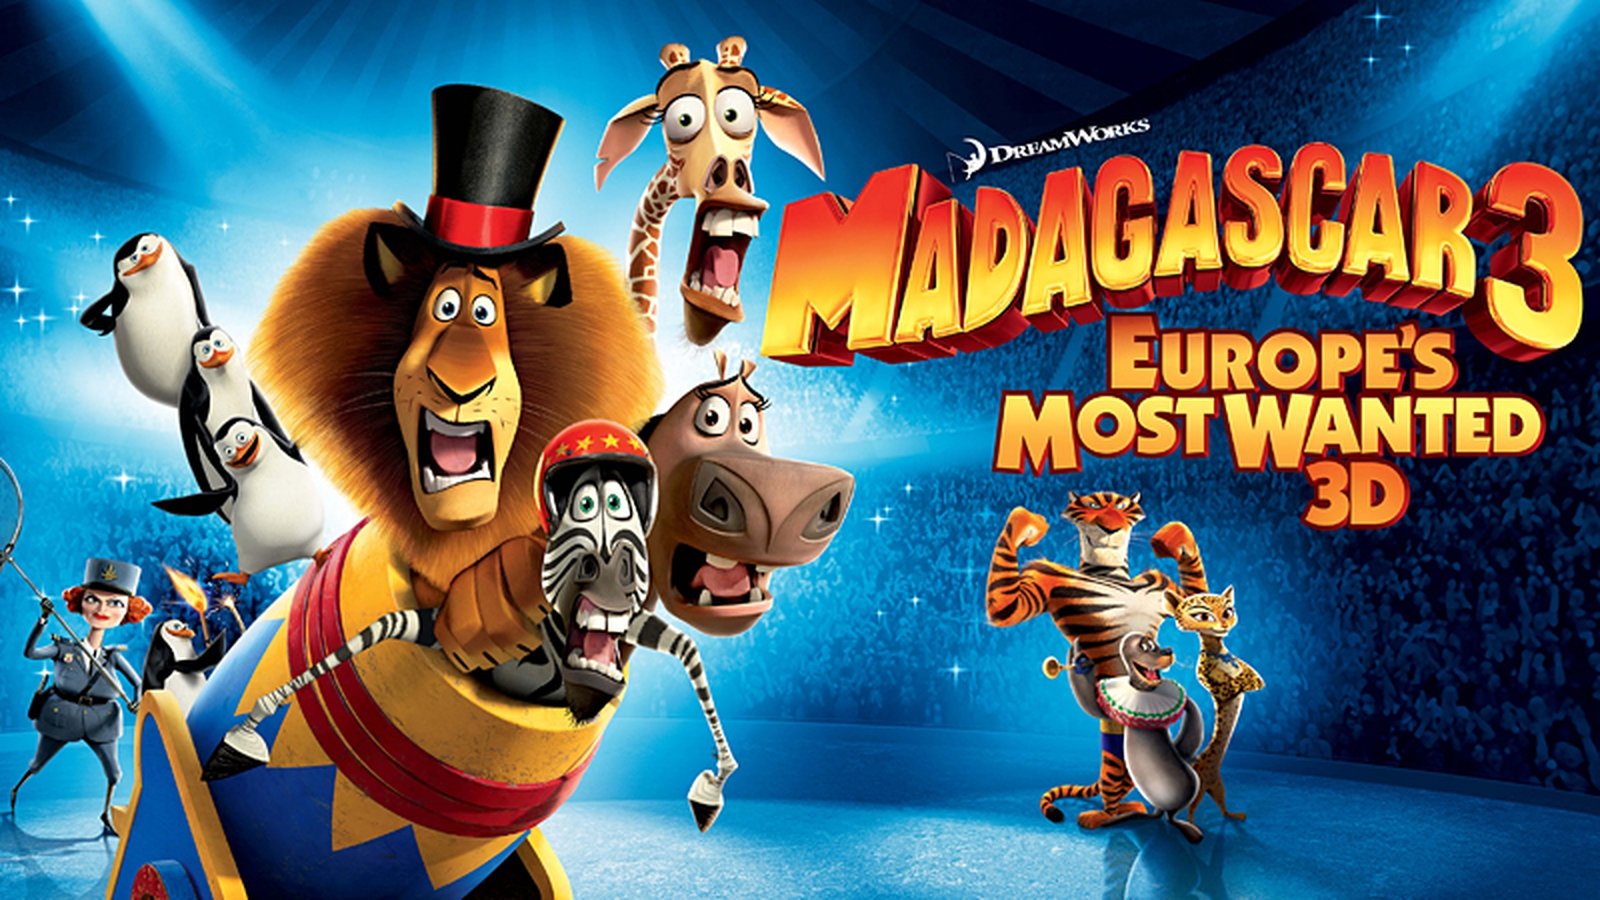 Мадагаскар челны расписание сеансов на сегодня. Madagascar 3 Europe's most wanted. Мадагаскар 3 Madagascar 3 Europe's most wanted 2012. Мадагаскар 3 (2012) poster. Дримворкс Мадагаскар 3.